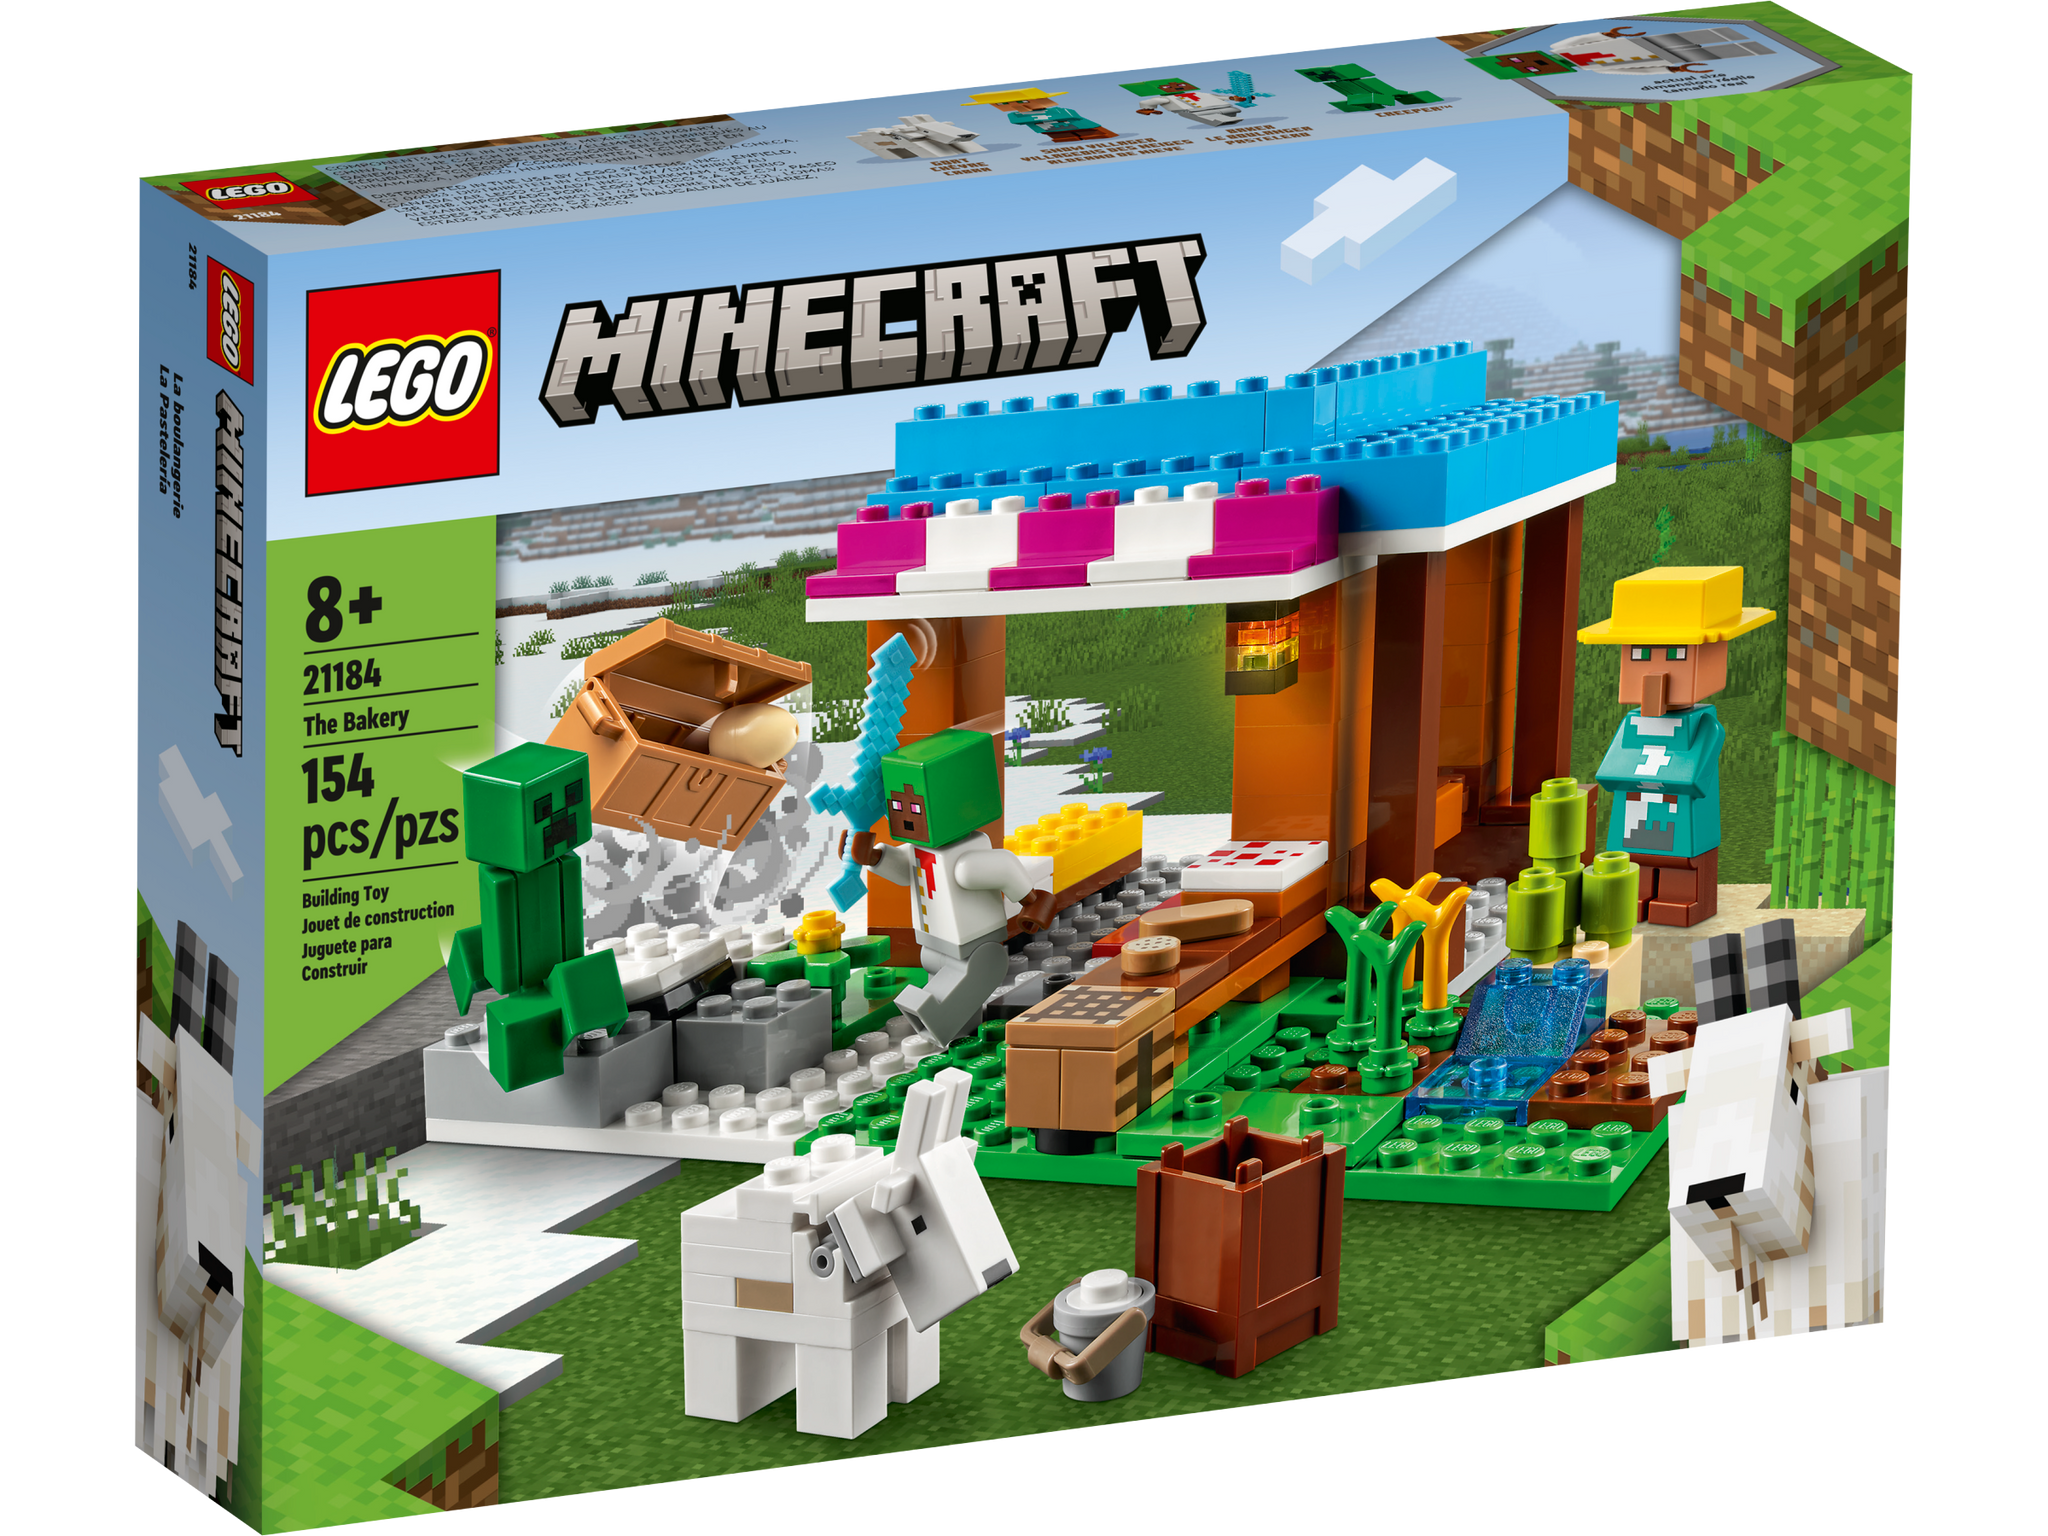 Lego Minecraft La Boulangerie - 21184